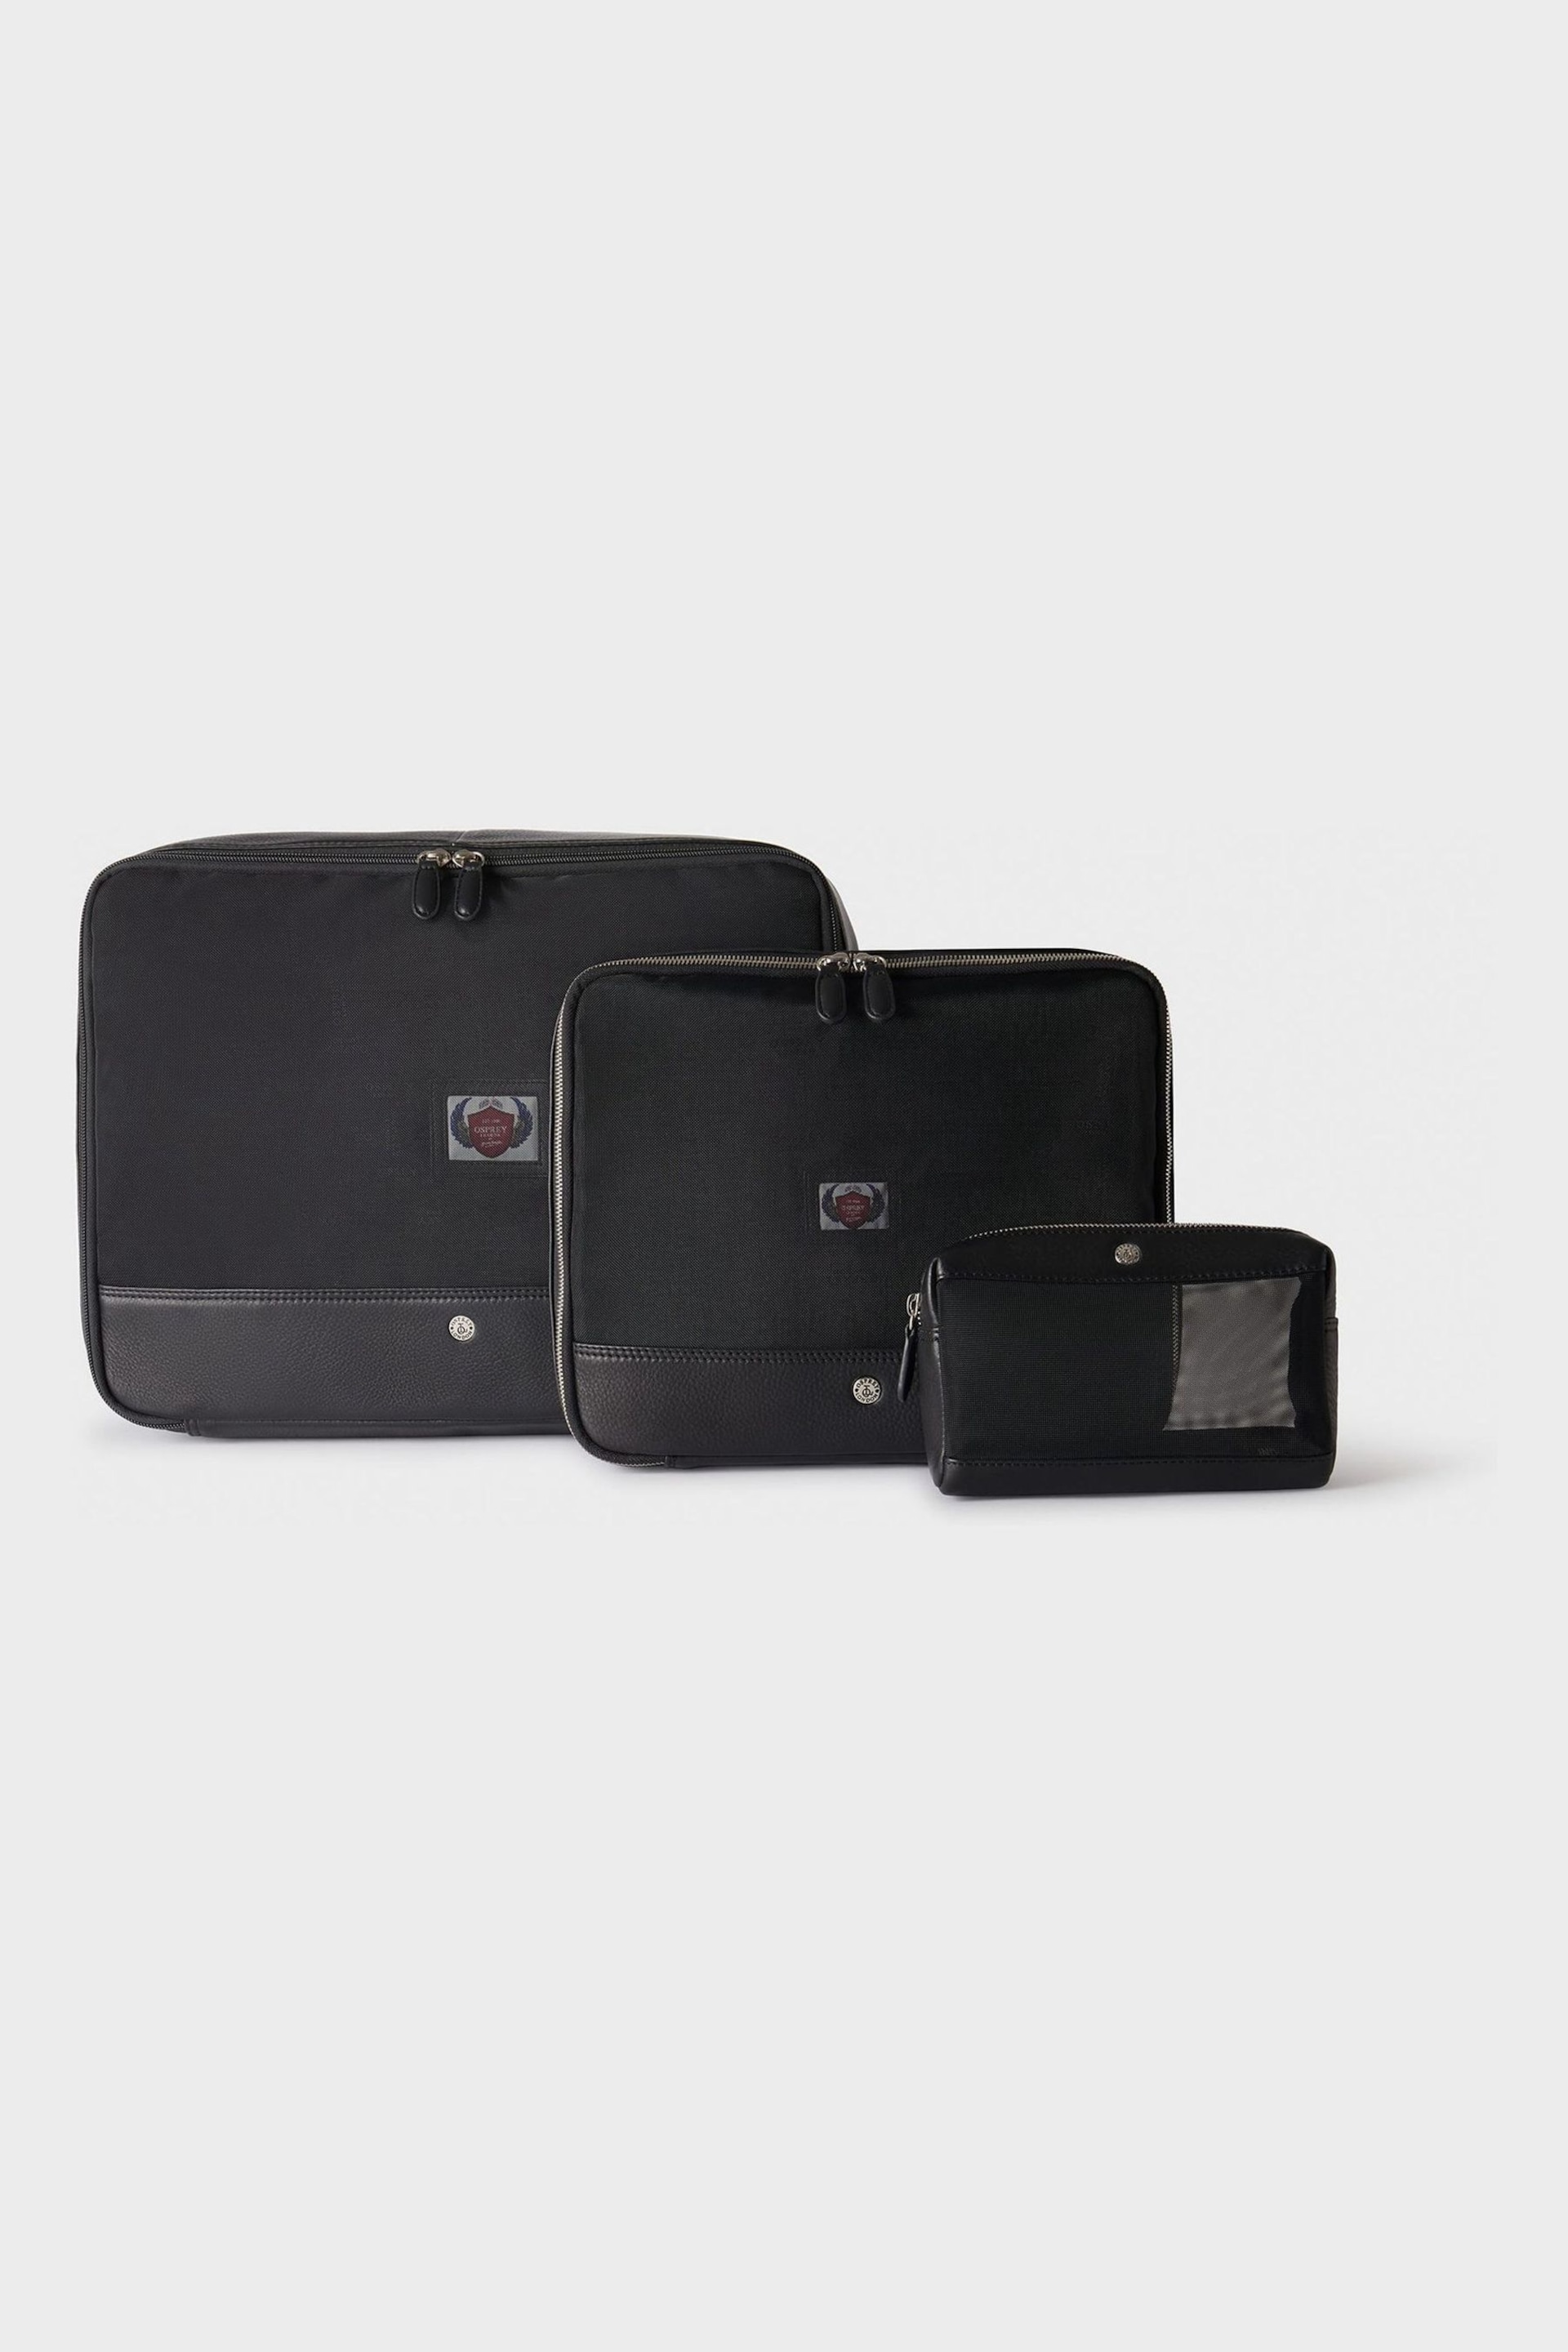 Osprey London The Double Zip Suitcase Organiser Set - Image 1 of 4